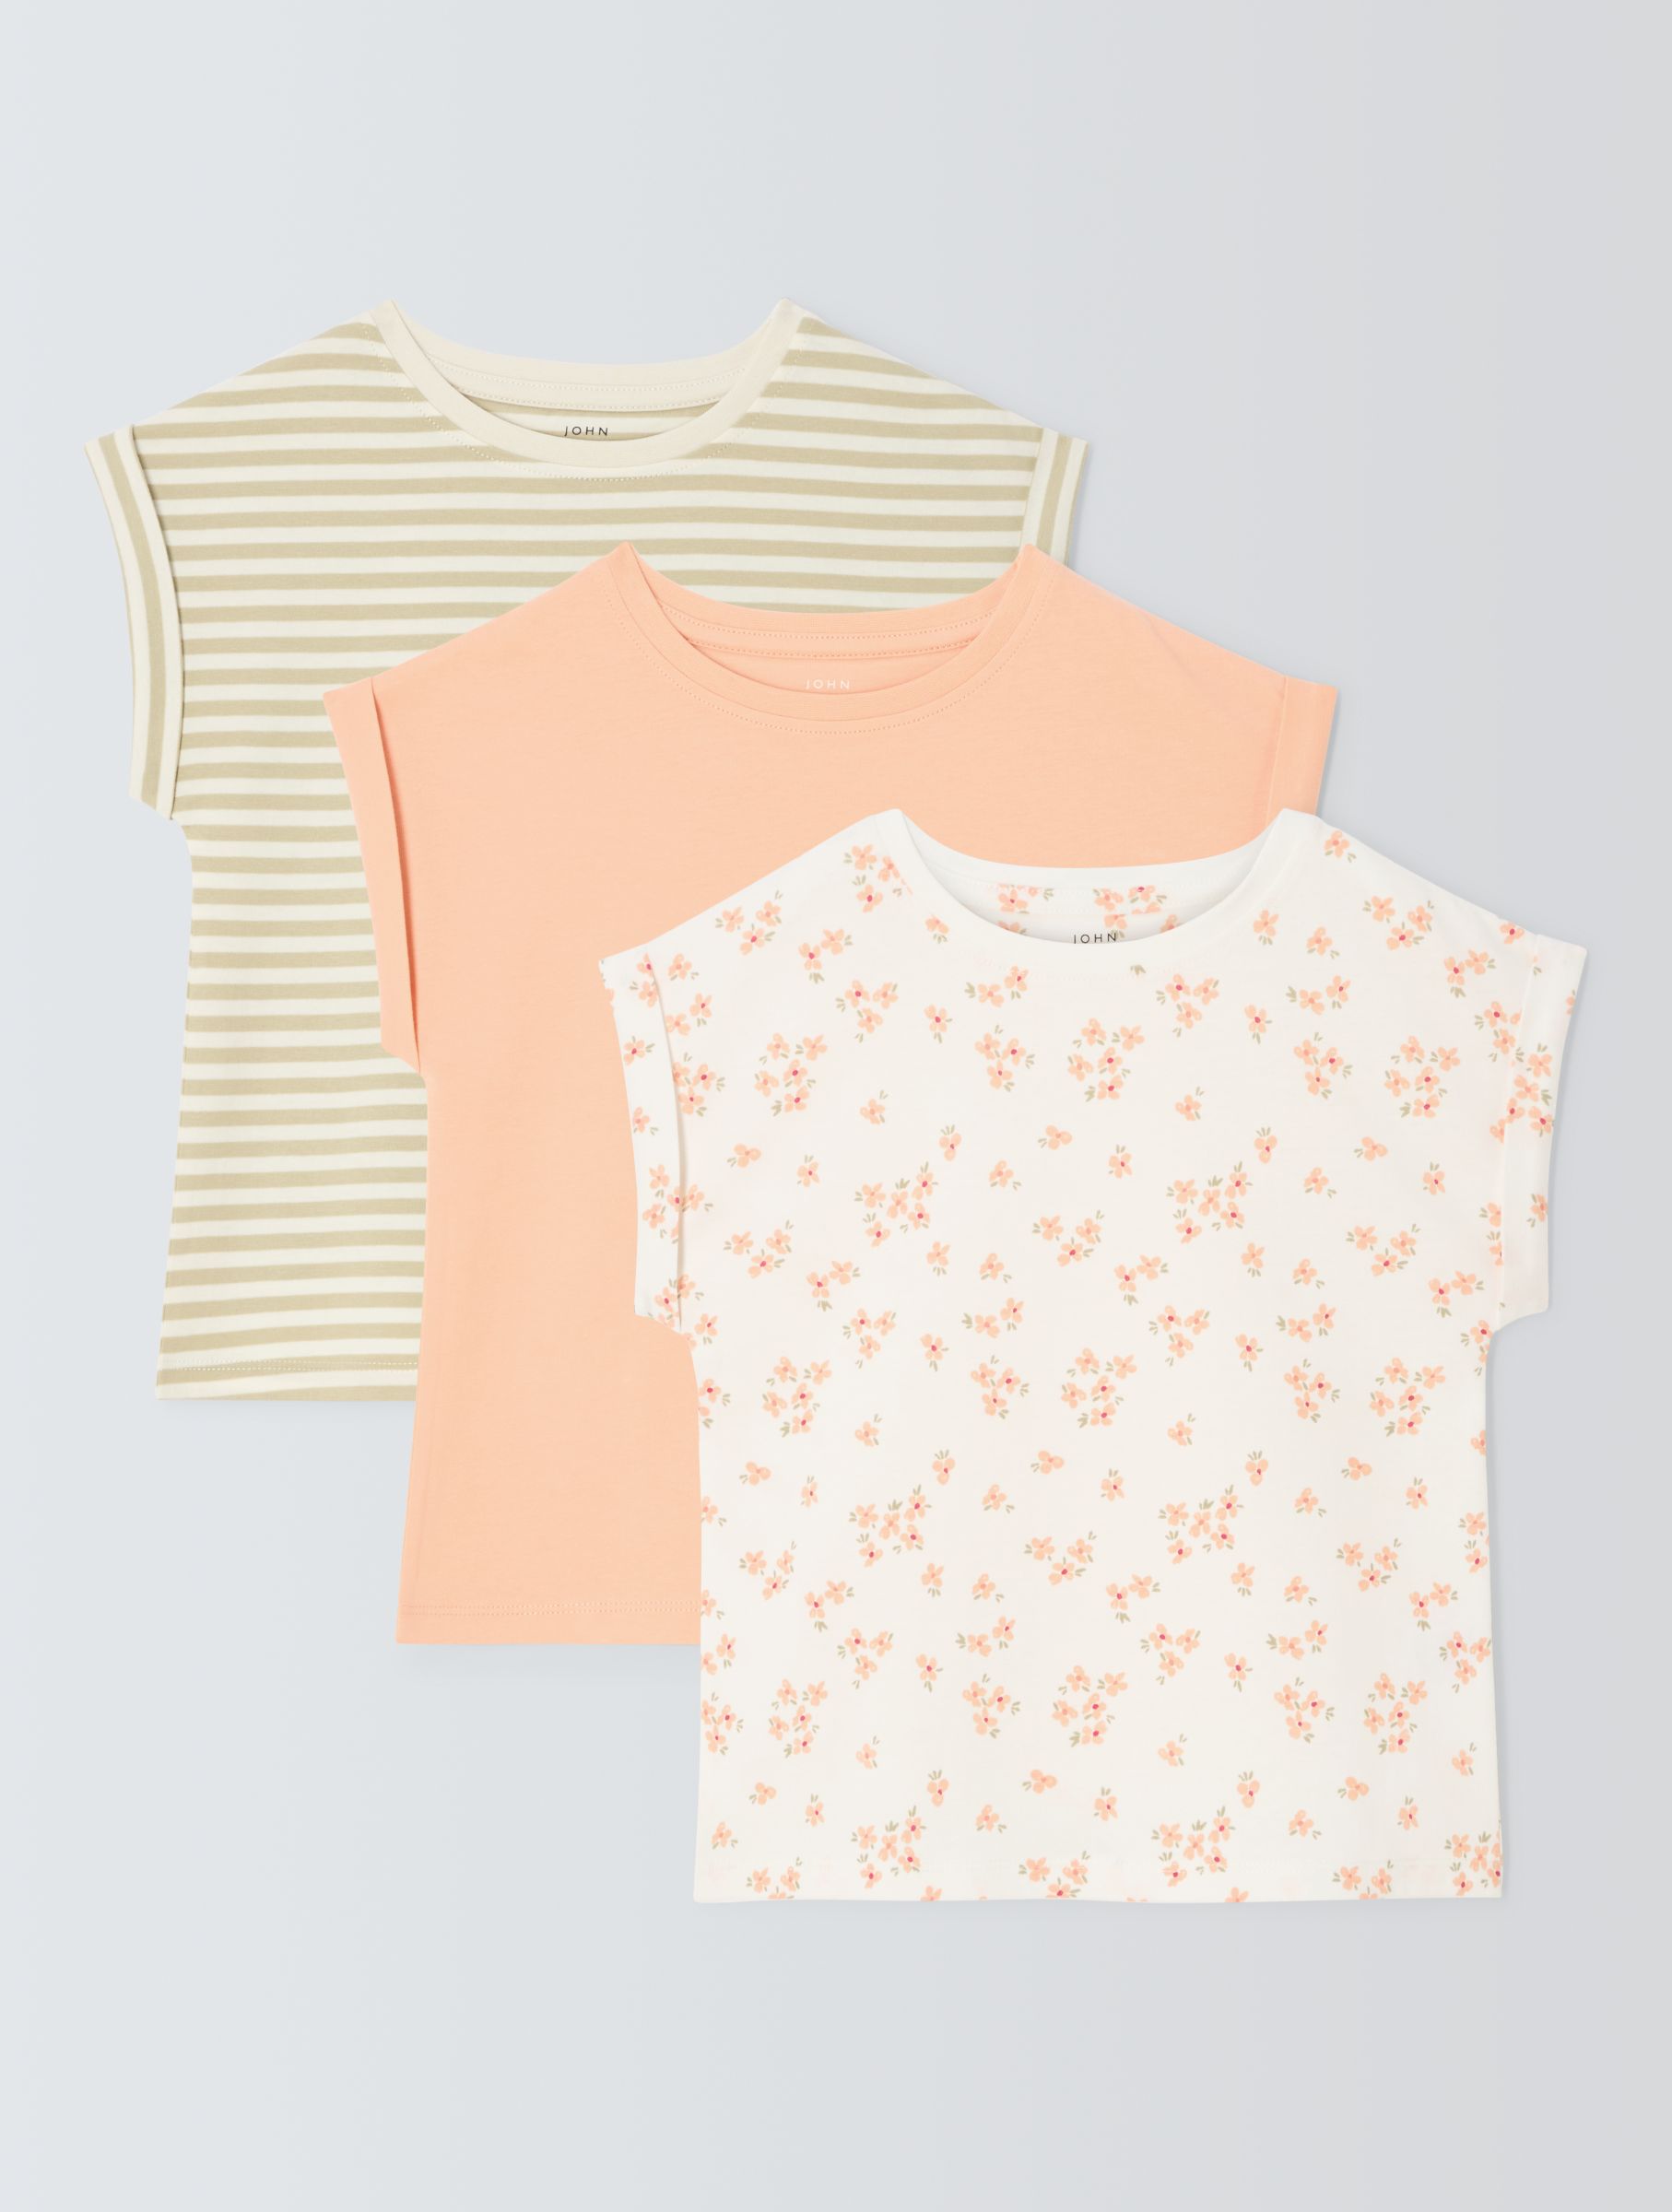 John Lewis Kids' Stripe/Plain/Floral T-Shirts, Pack of 3, Multi, 7 years